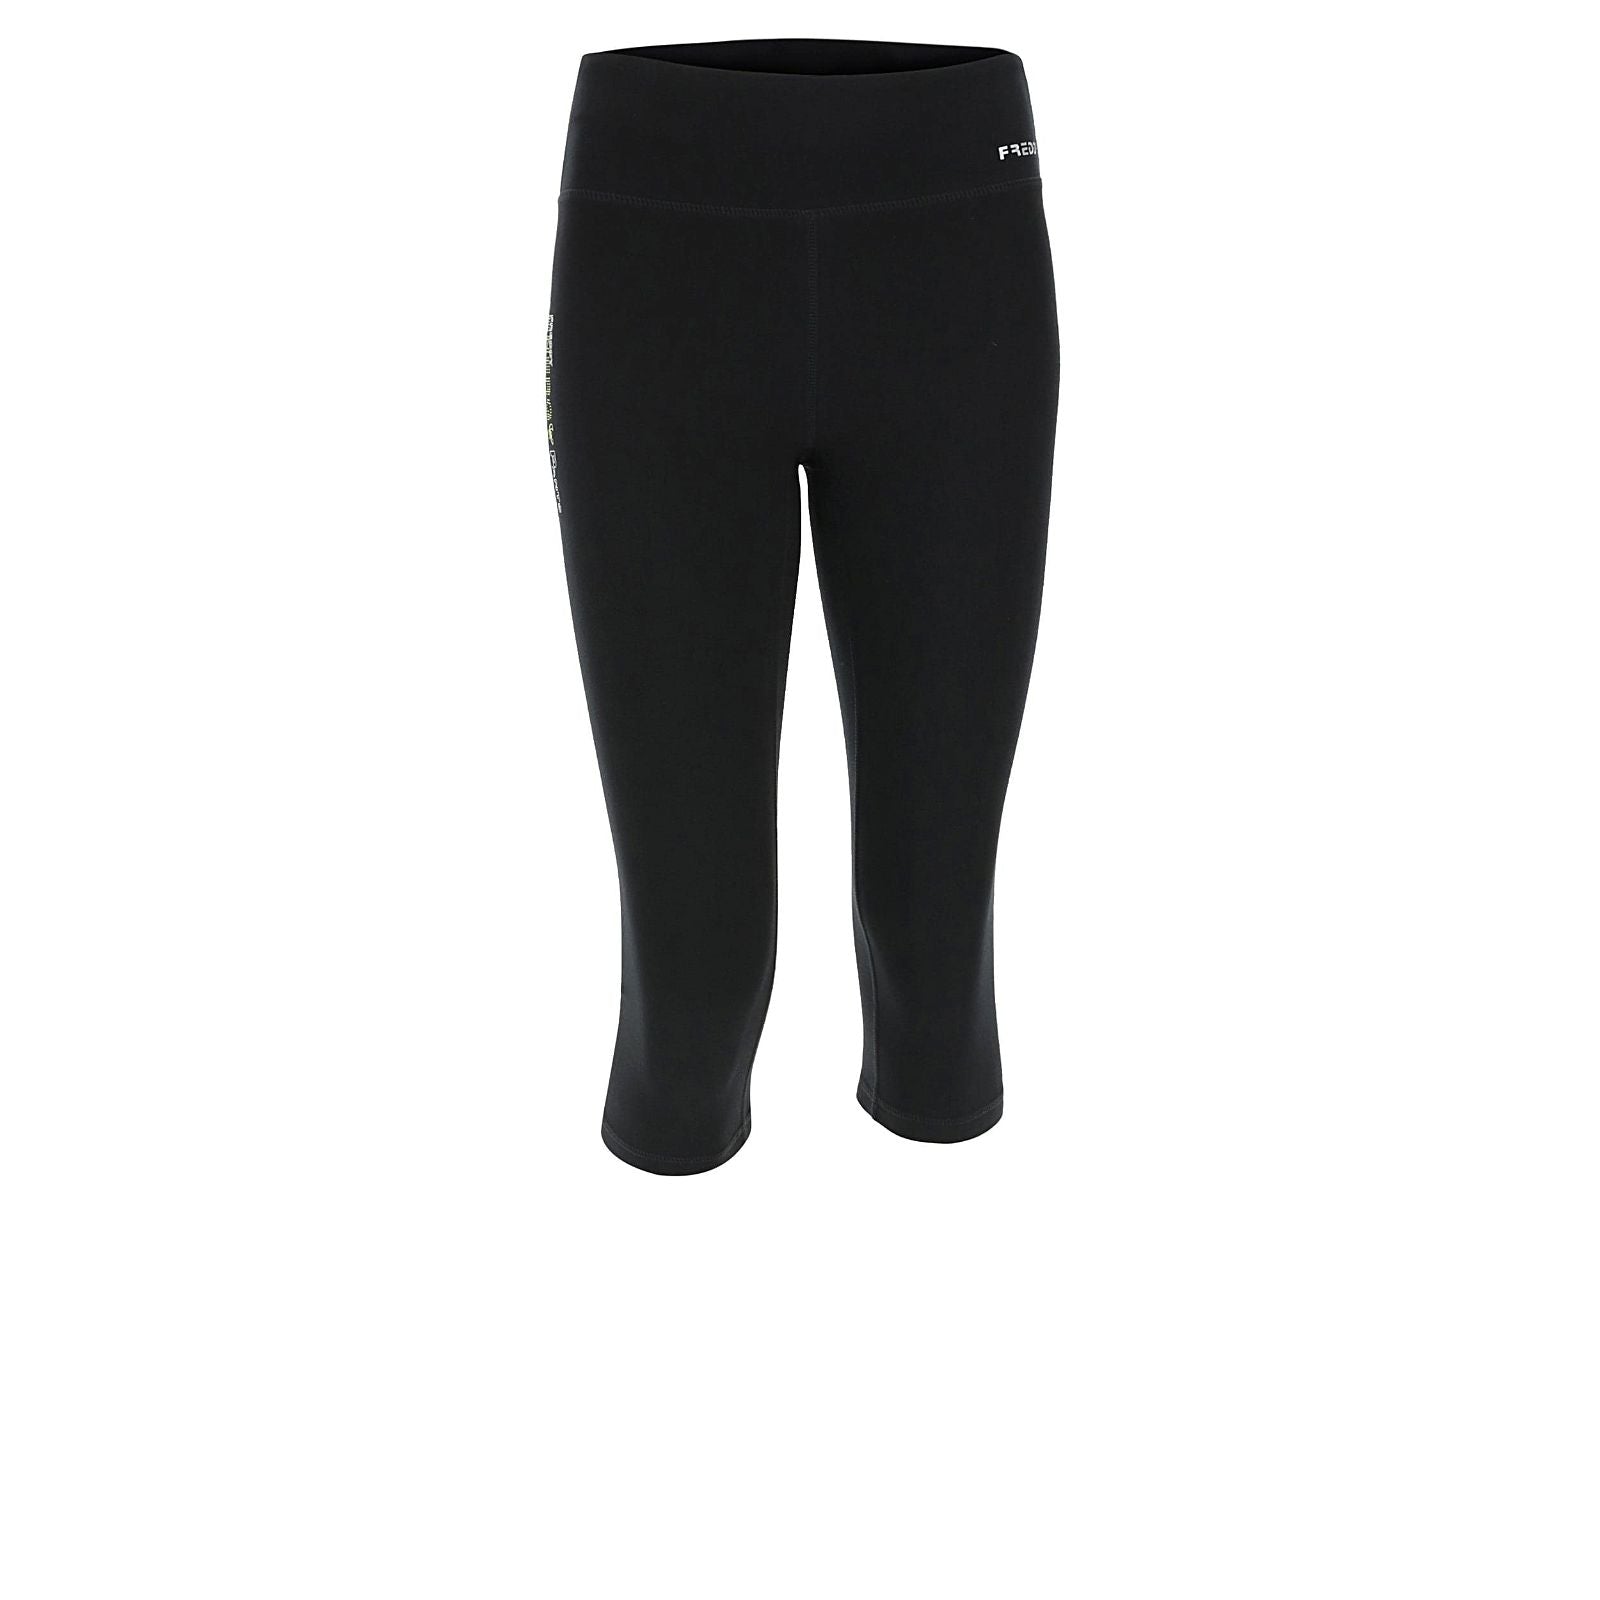 Diwo Energy Pants® - High Waisted - Capri Length - Black + Reflective Details 2